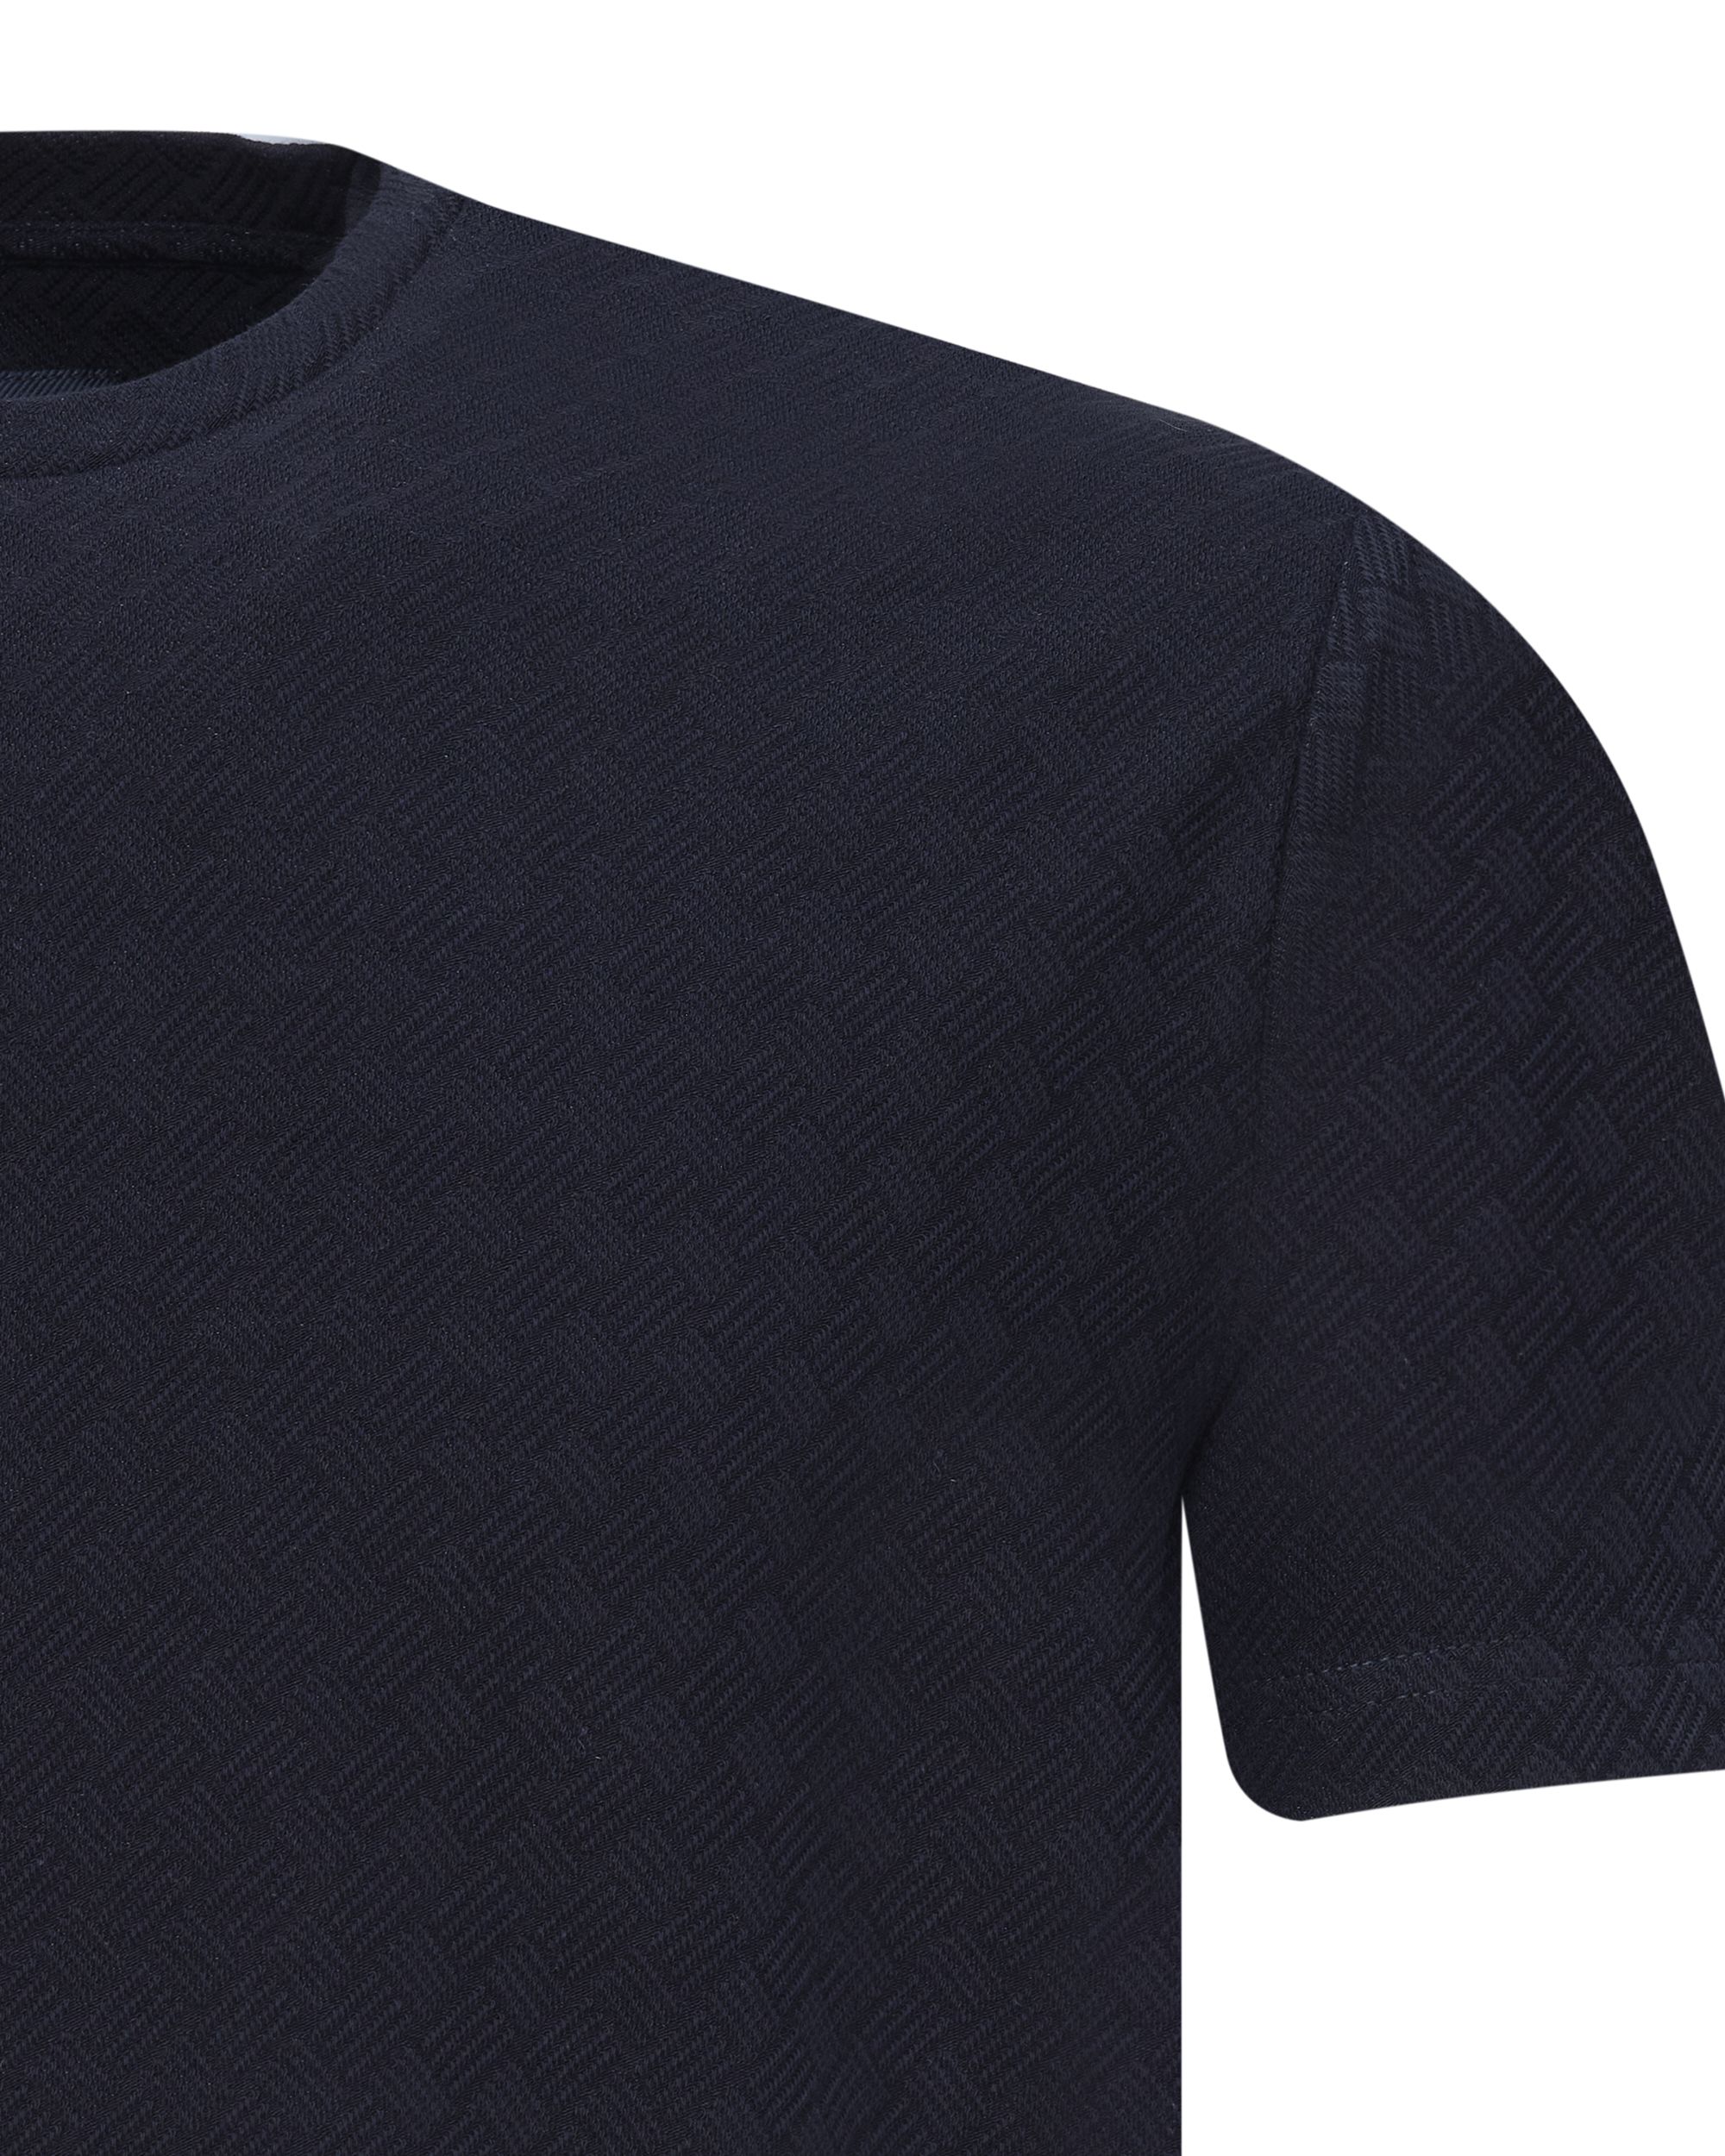 Cruyff Casco T-shirt KM Zwart 078800-001-L